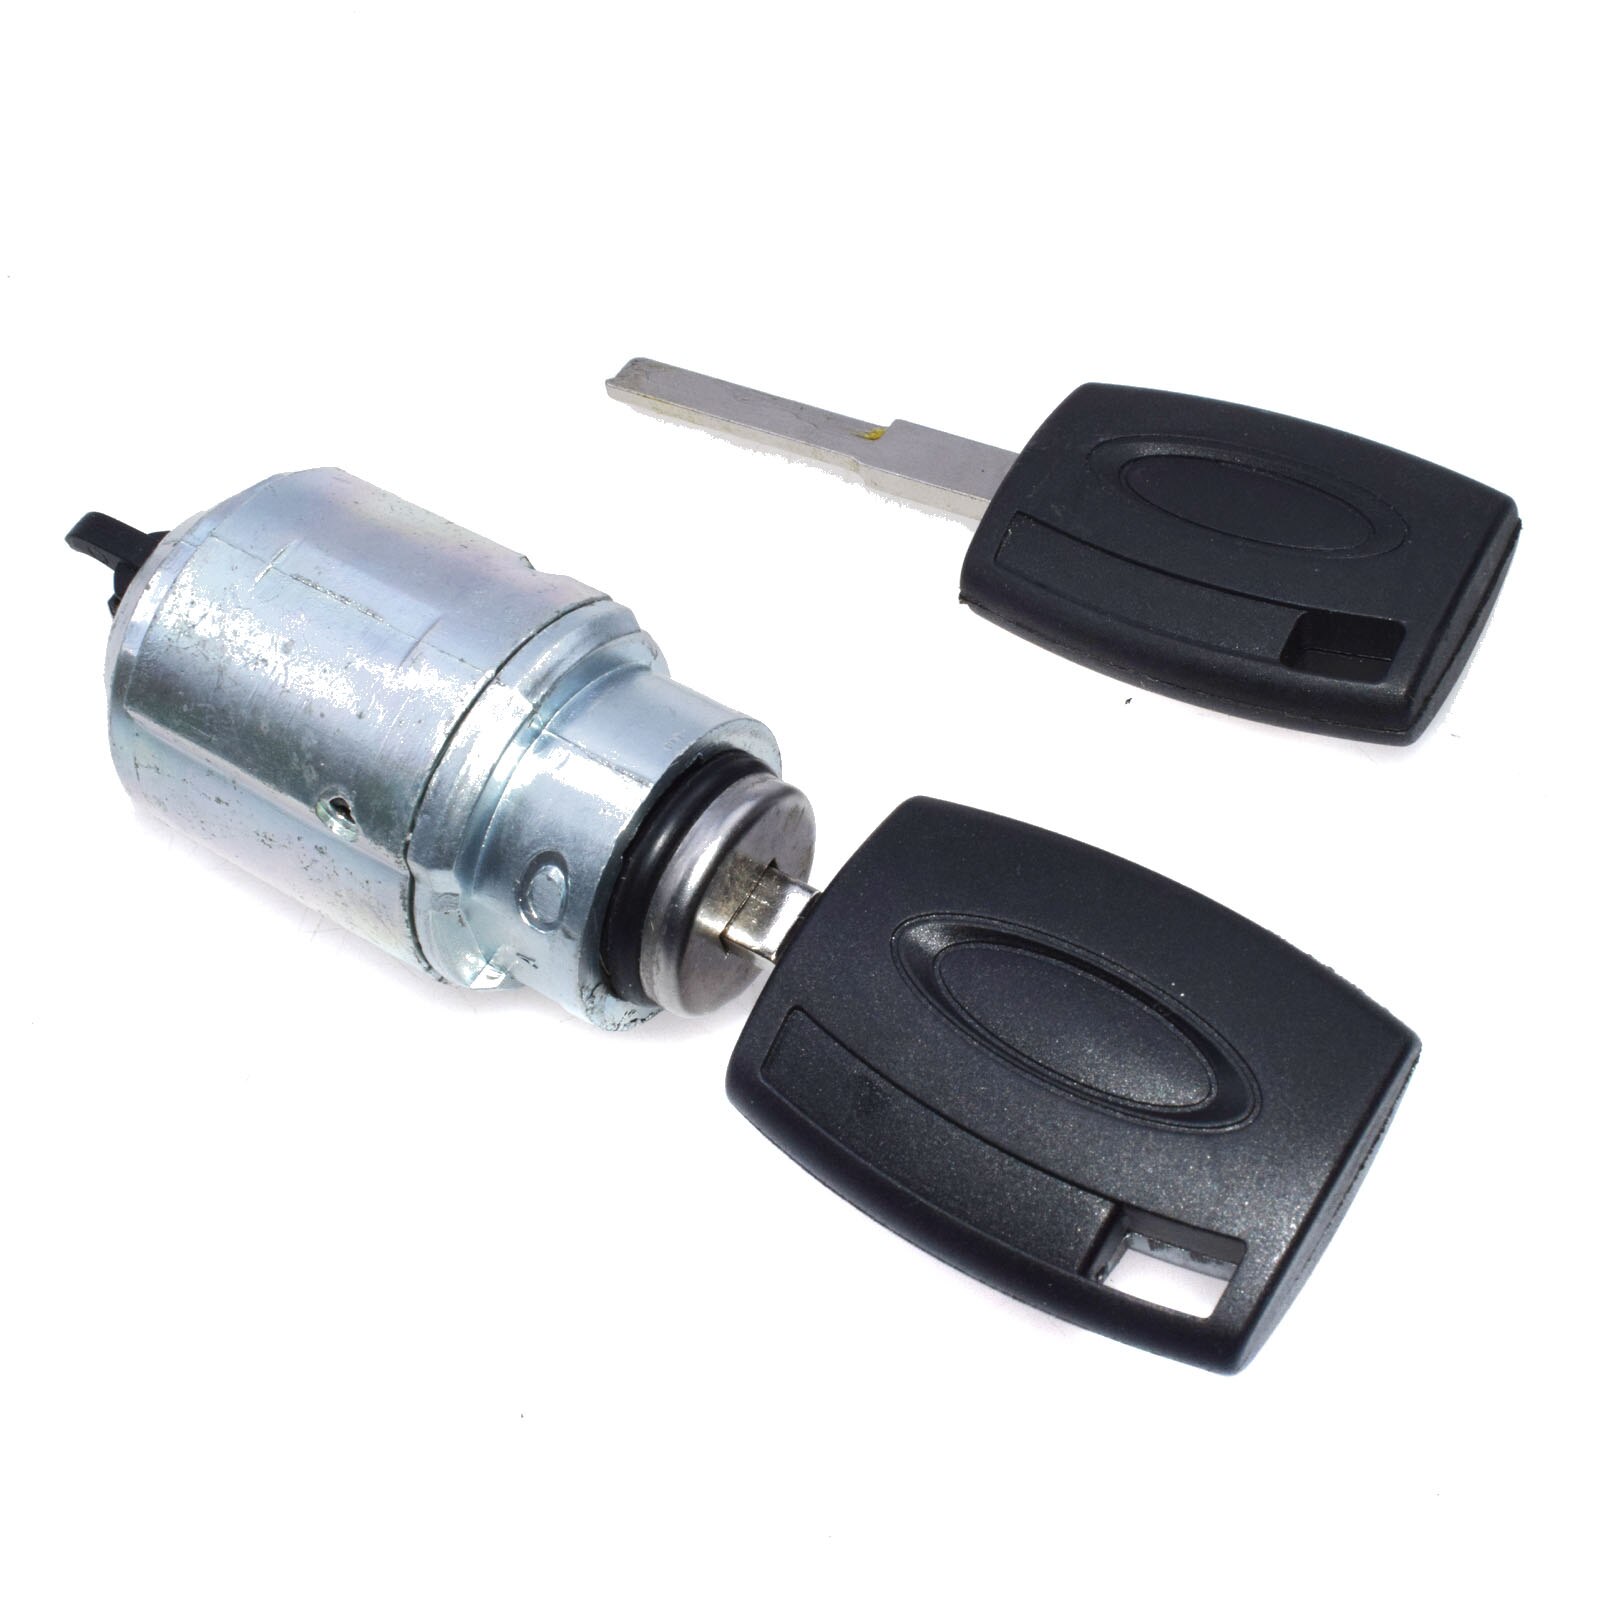 Wolfigo bilkappe motorhjelm lås udløserkit med nøgler og forbindelsesstang til ford til focus  ii 2004 4 m 5 aa 16 b 970ab 7 m 5 aa 16 b 970aa